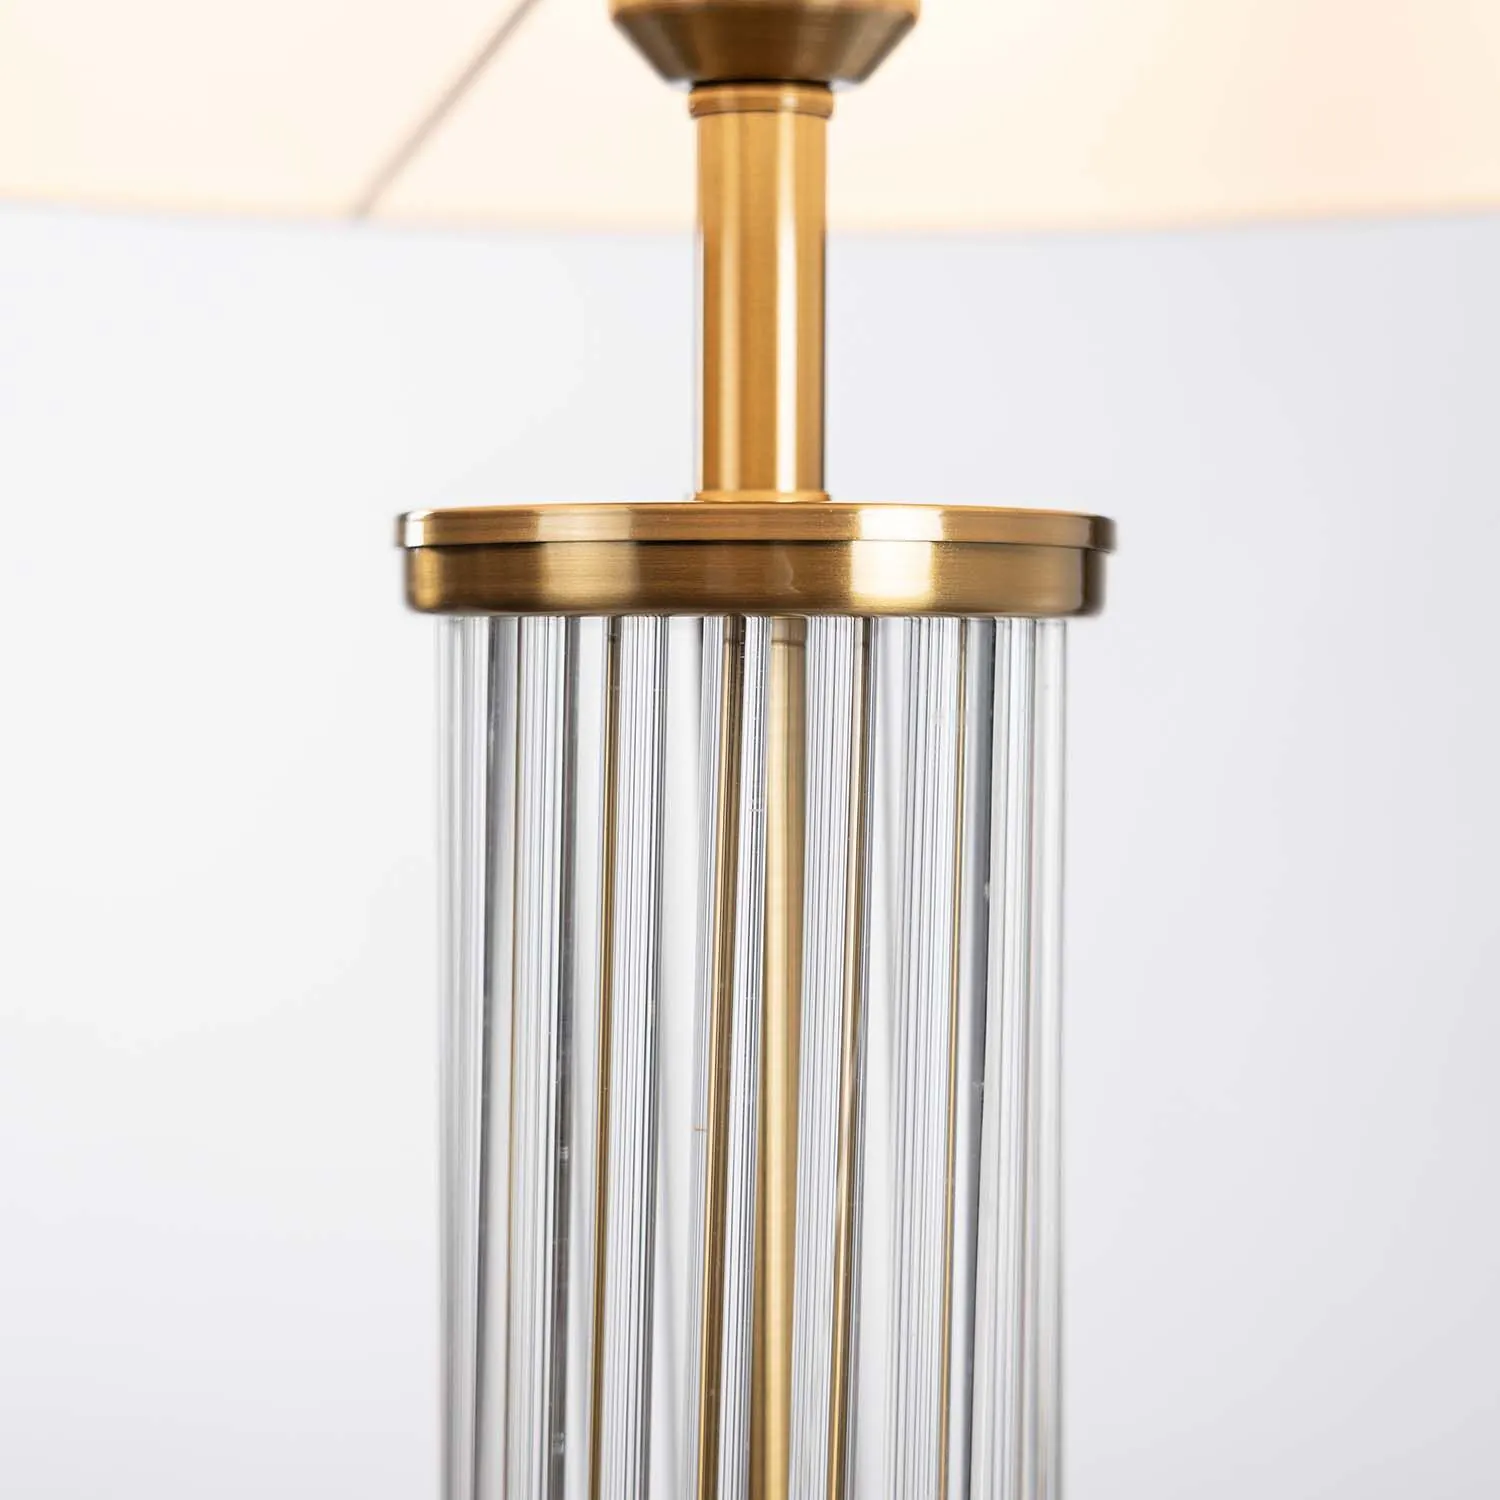 Bordslampa Glas/Mässing H62cm - Cannes